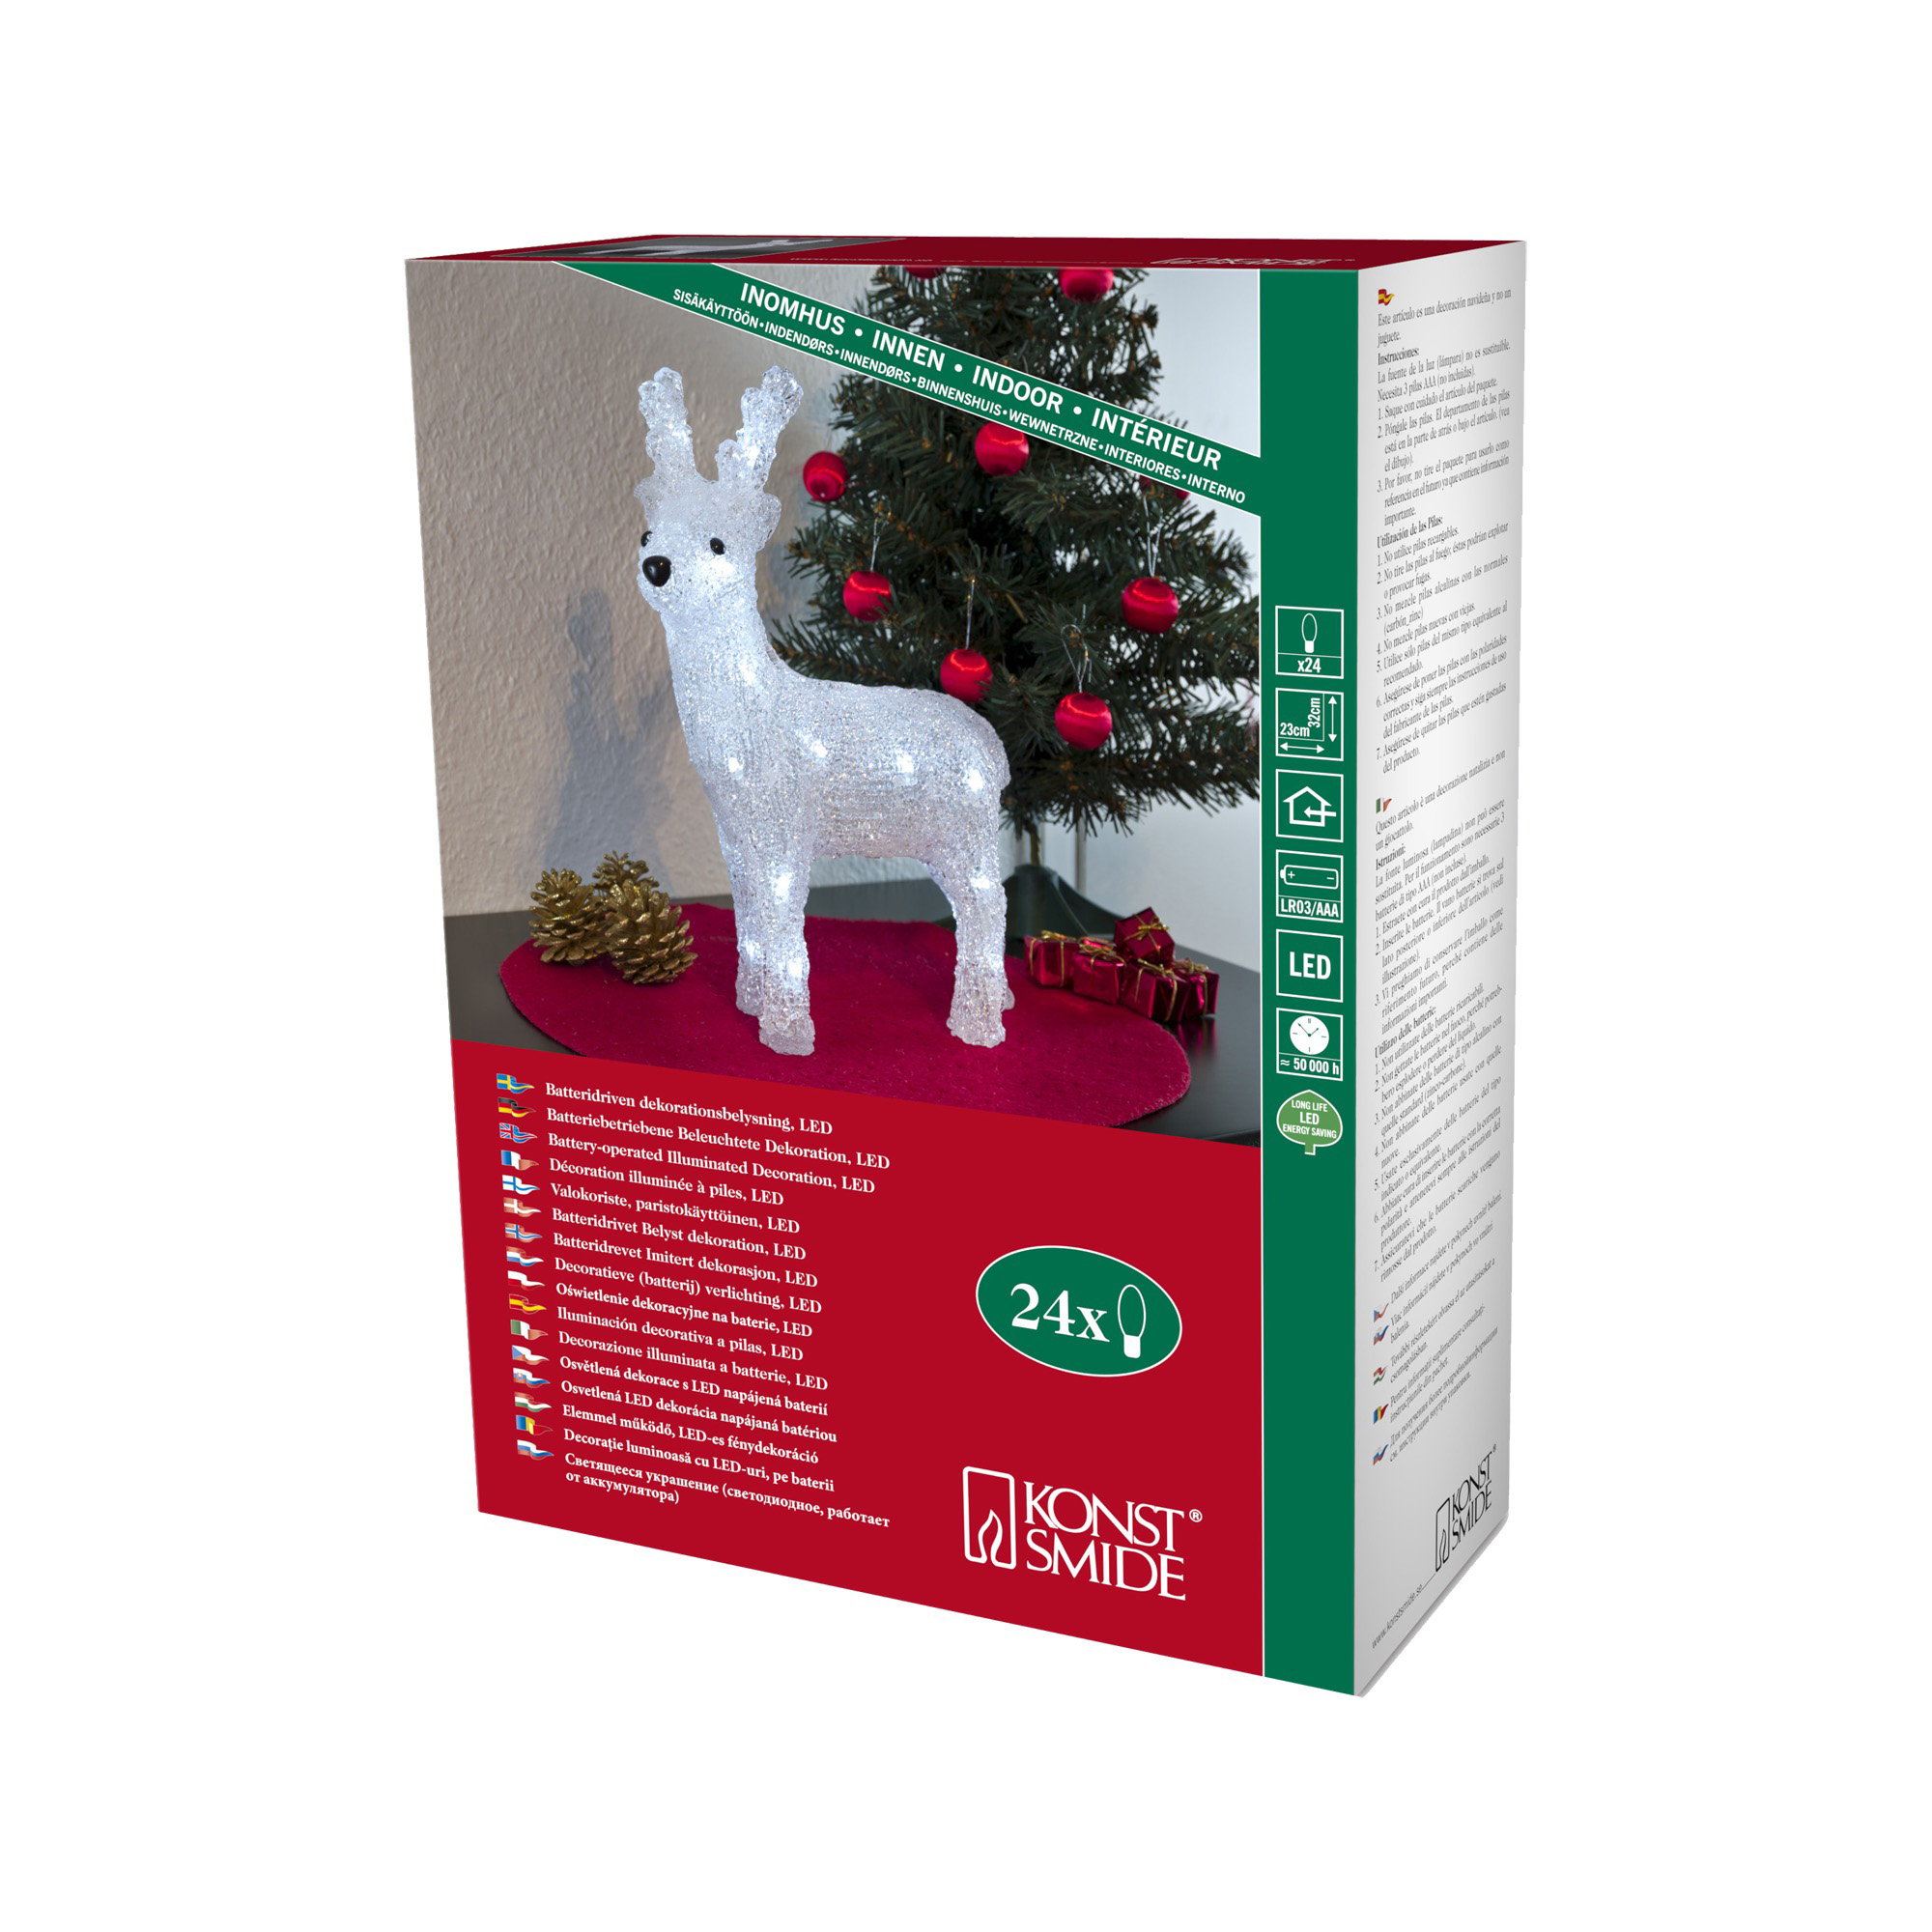 Small LED Acryl reindeer, standing